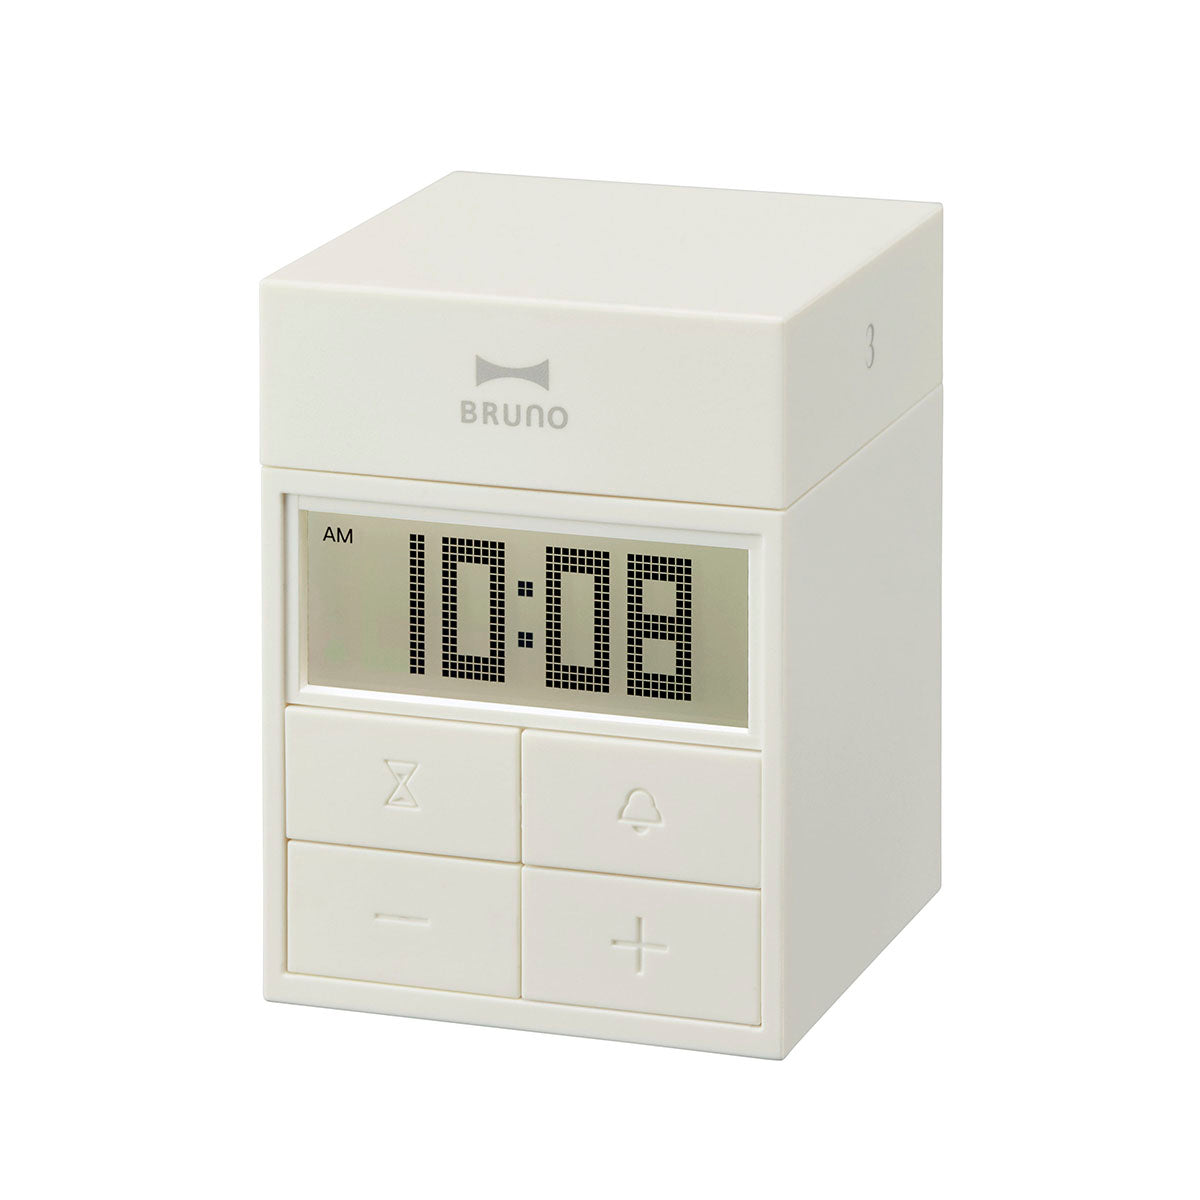 BRUNO Twist Table Clock - Red BCA026-RD